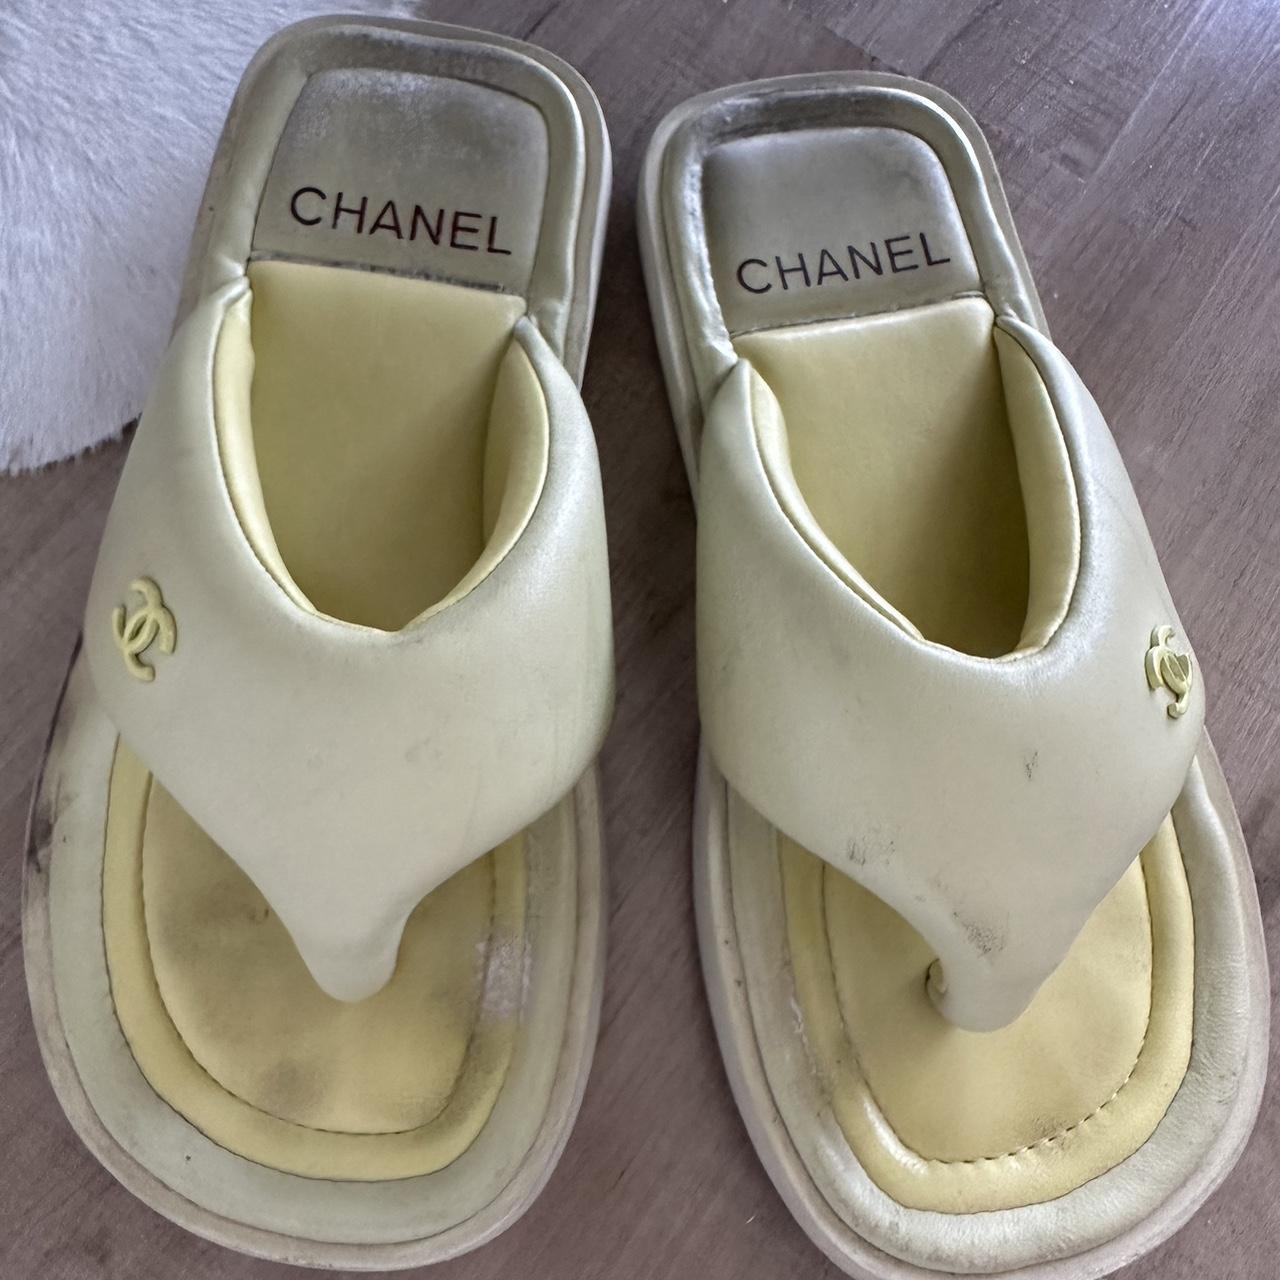 Chanel sandals size 41, fits US size 10. , Please